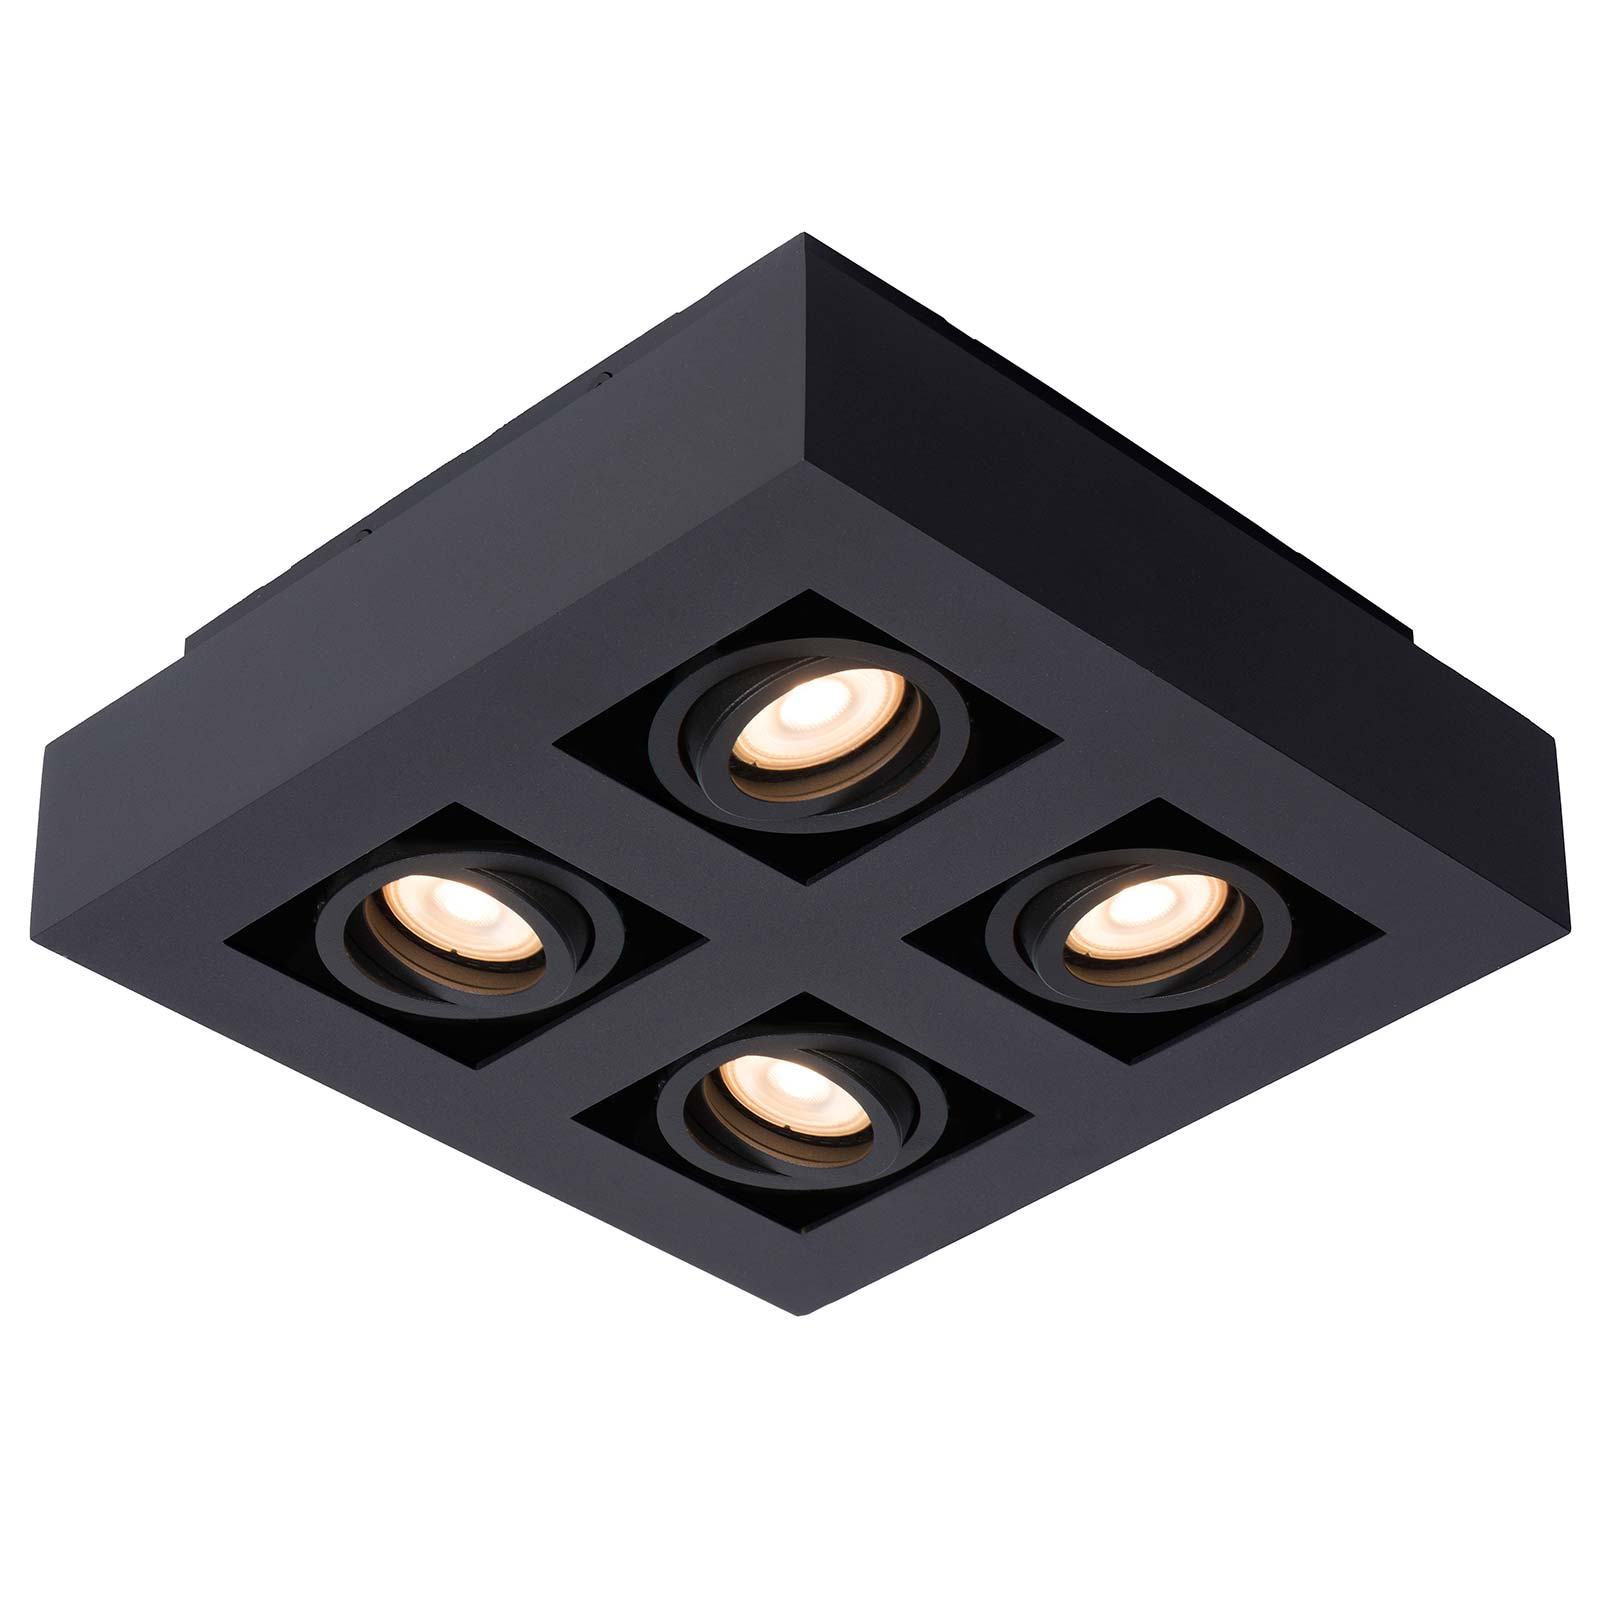 Lucide Xirax Spot plafond LED Dim to warm GU10 4x5W Noir 09119 21 30